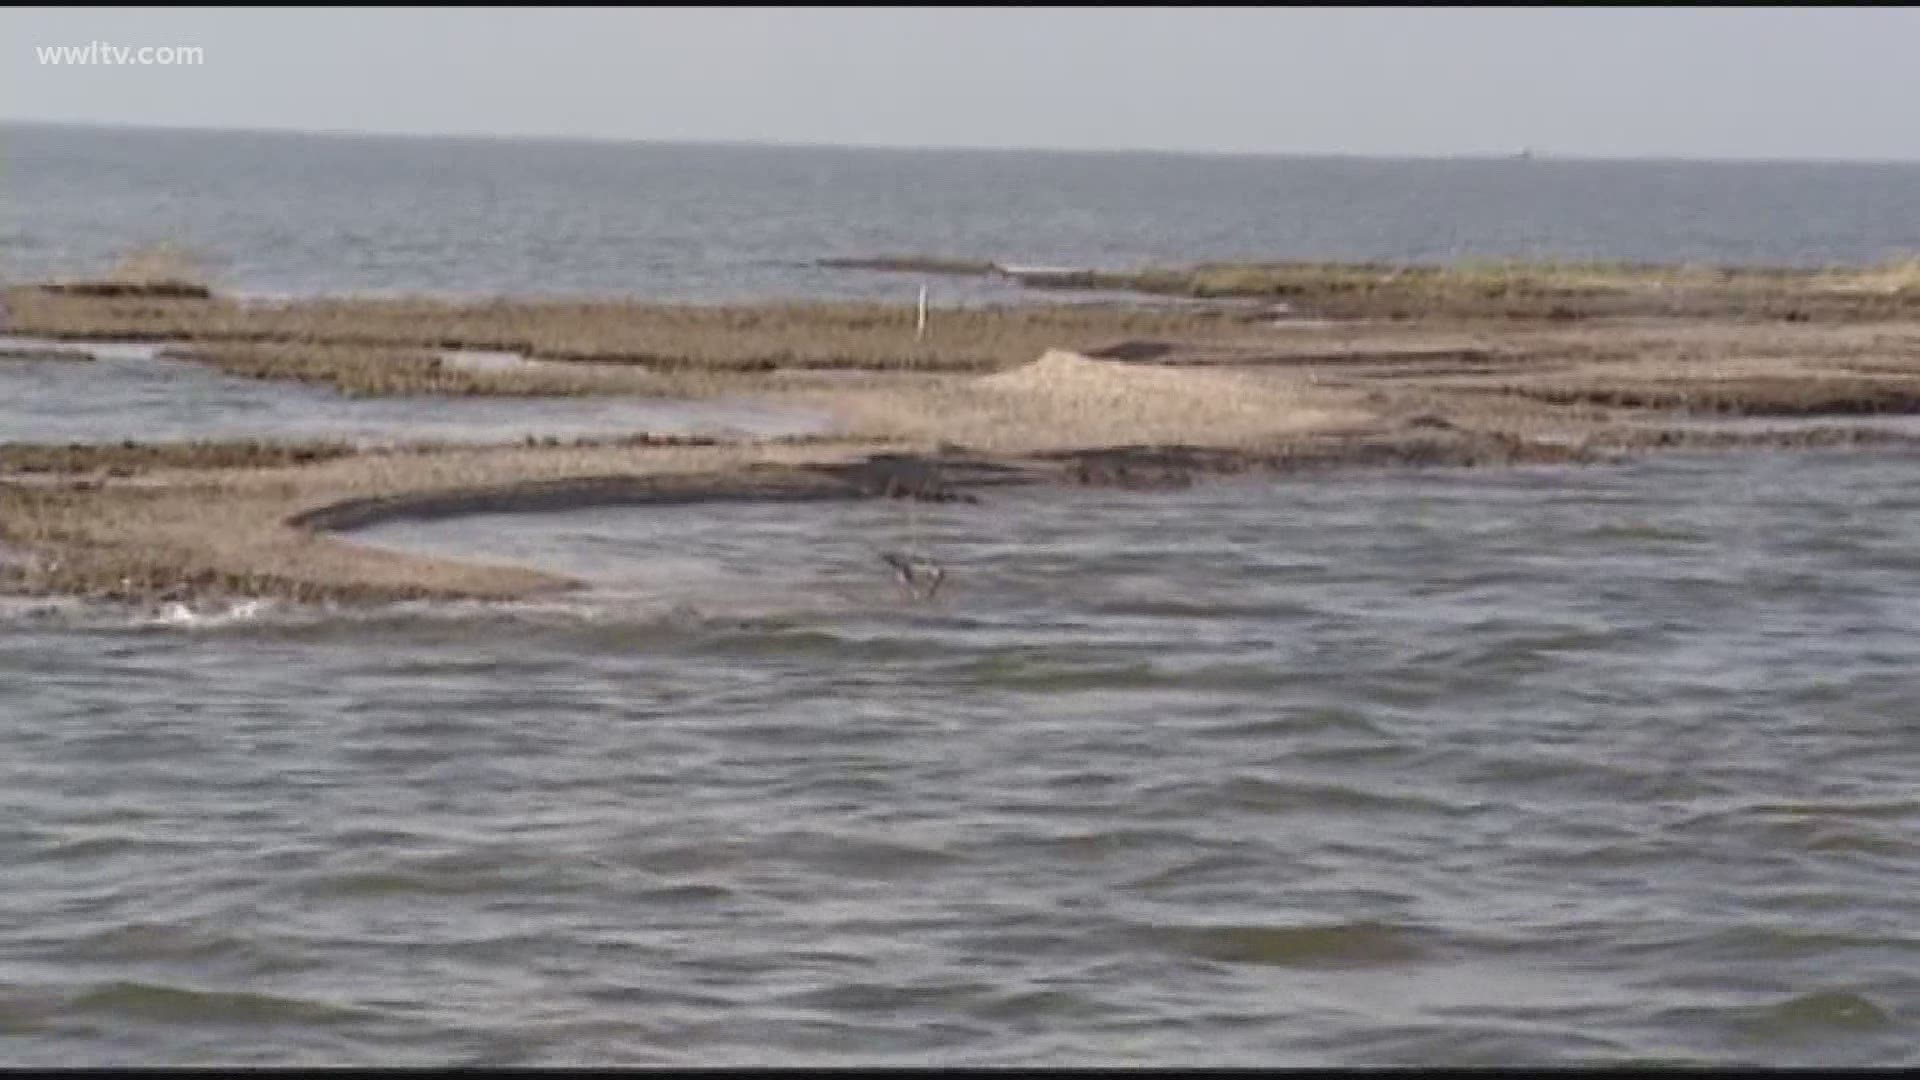 How has Hurricane Laura damaged Louisiana's wetlands?